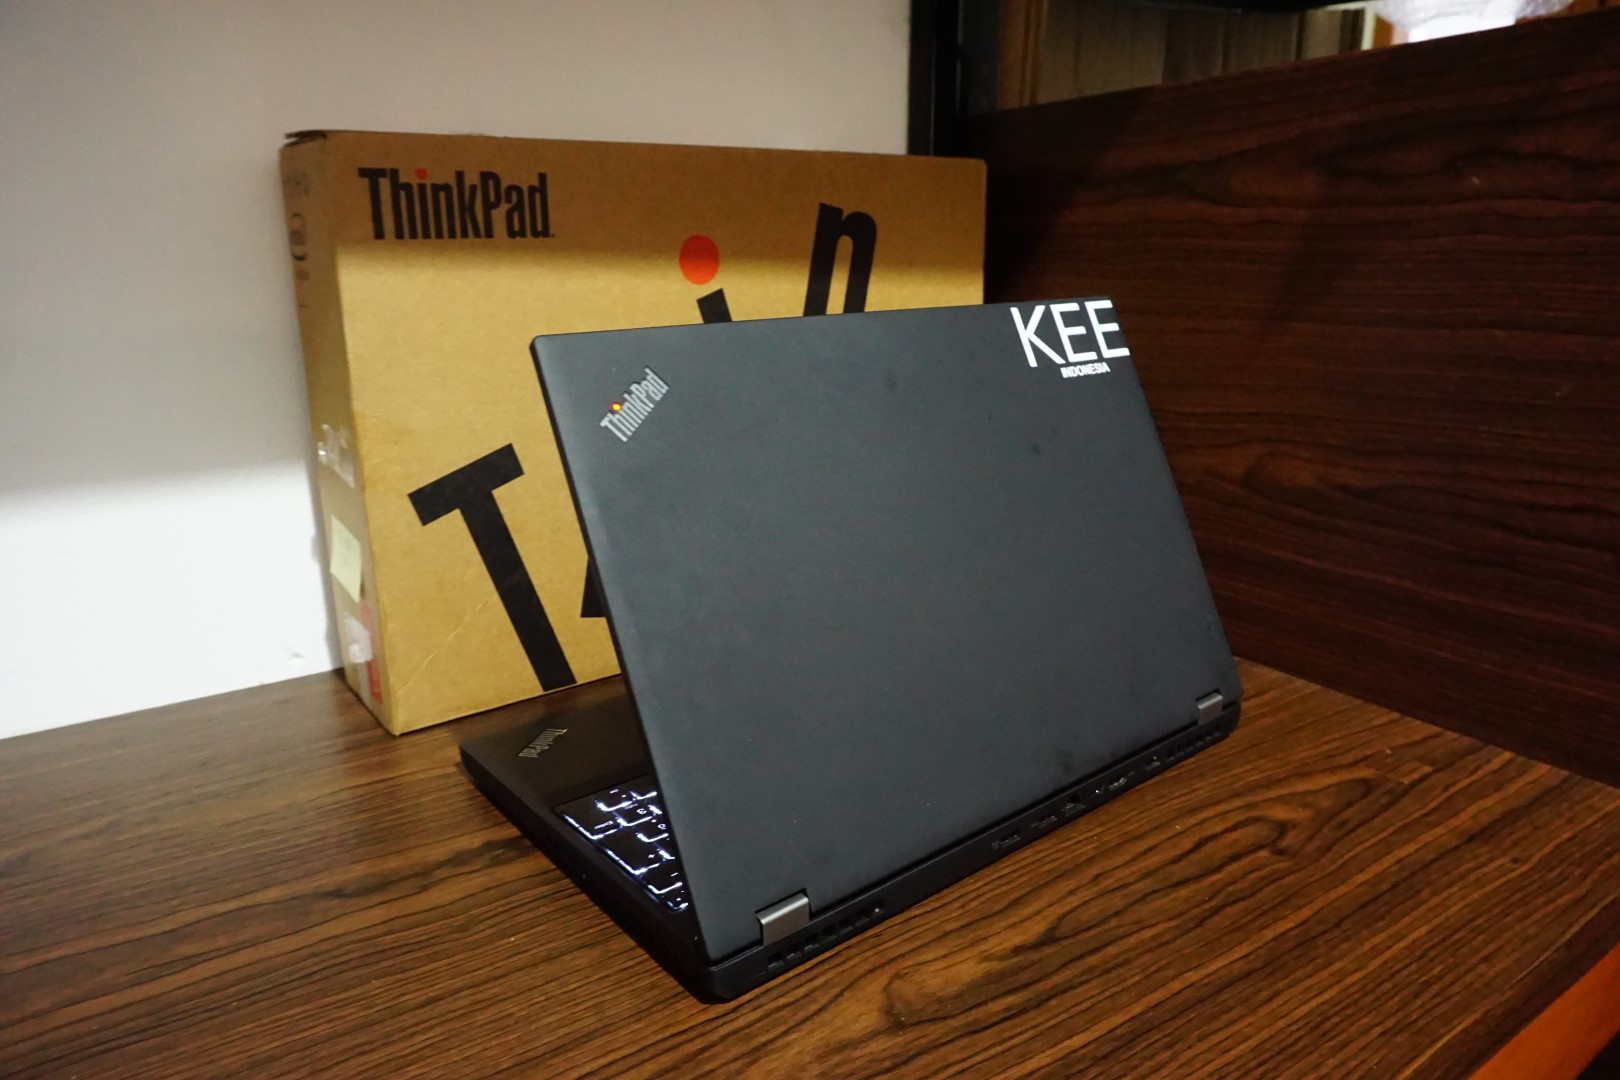 Jual Laptop Lenovo Thinkpad P51 Fullset Intel XEON